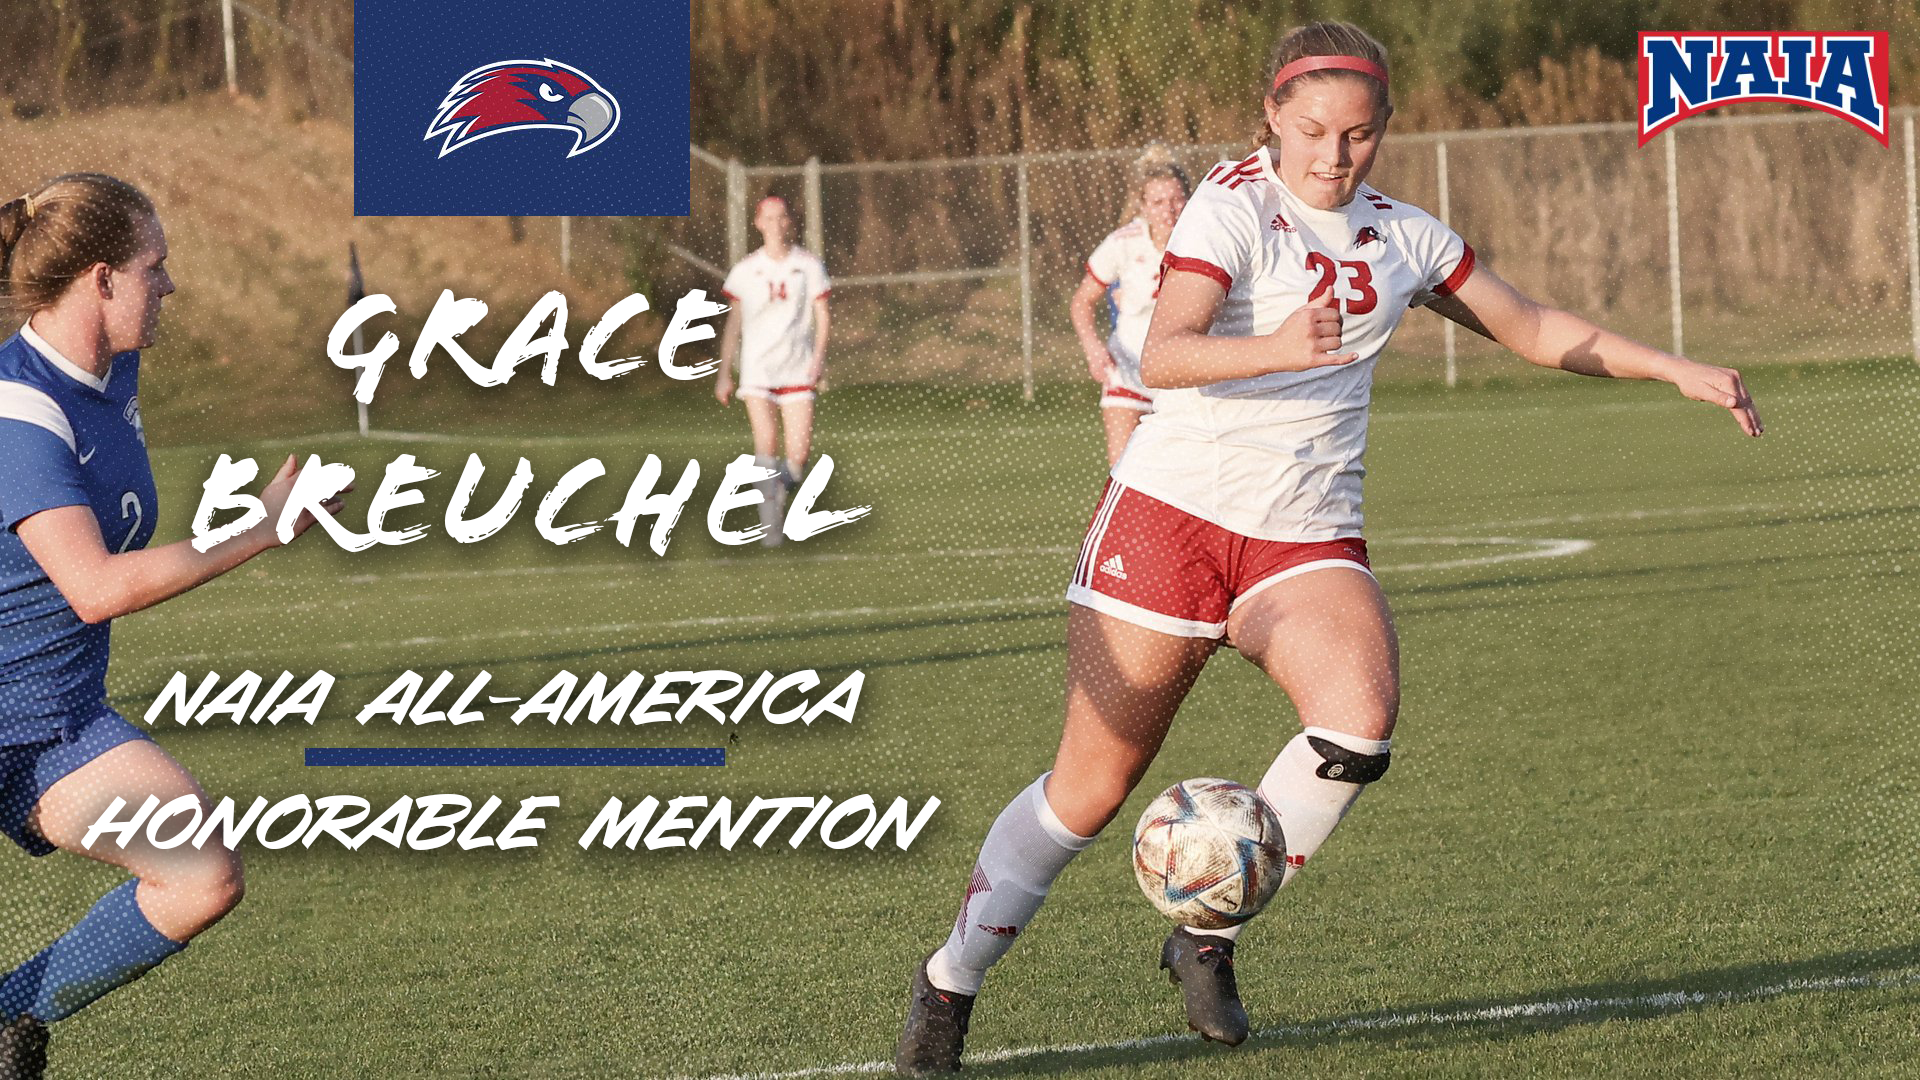 Breuchel Earns All-America Honorable Mention